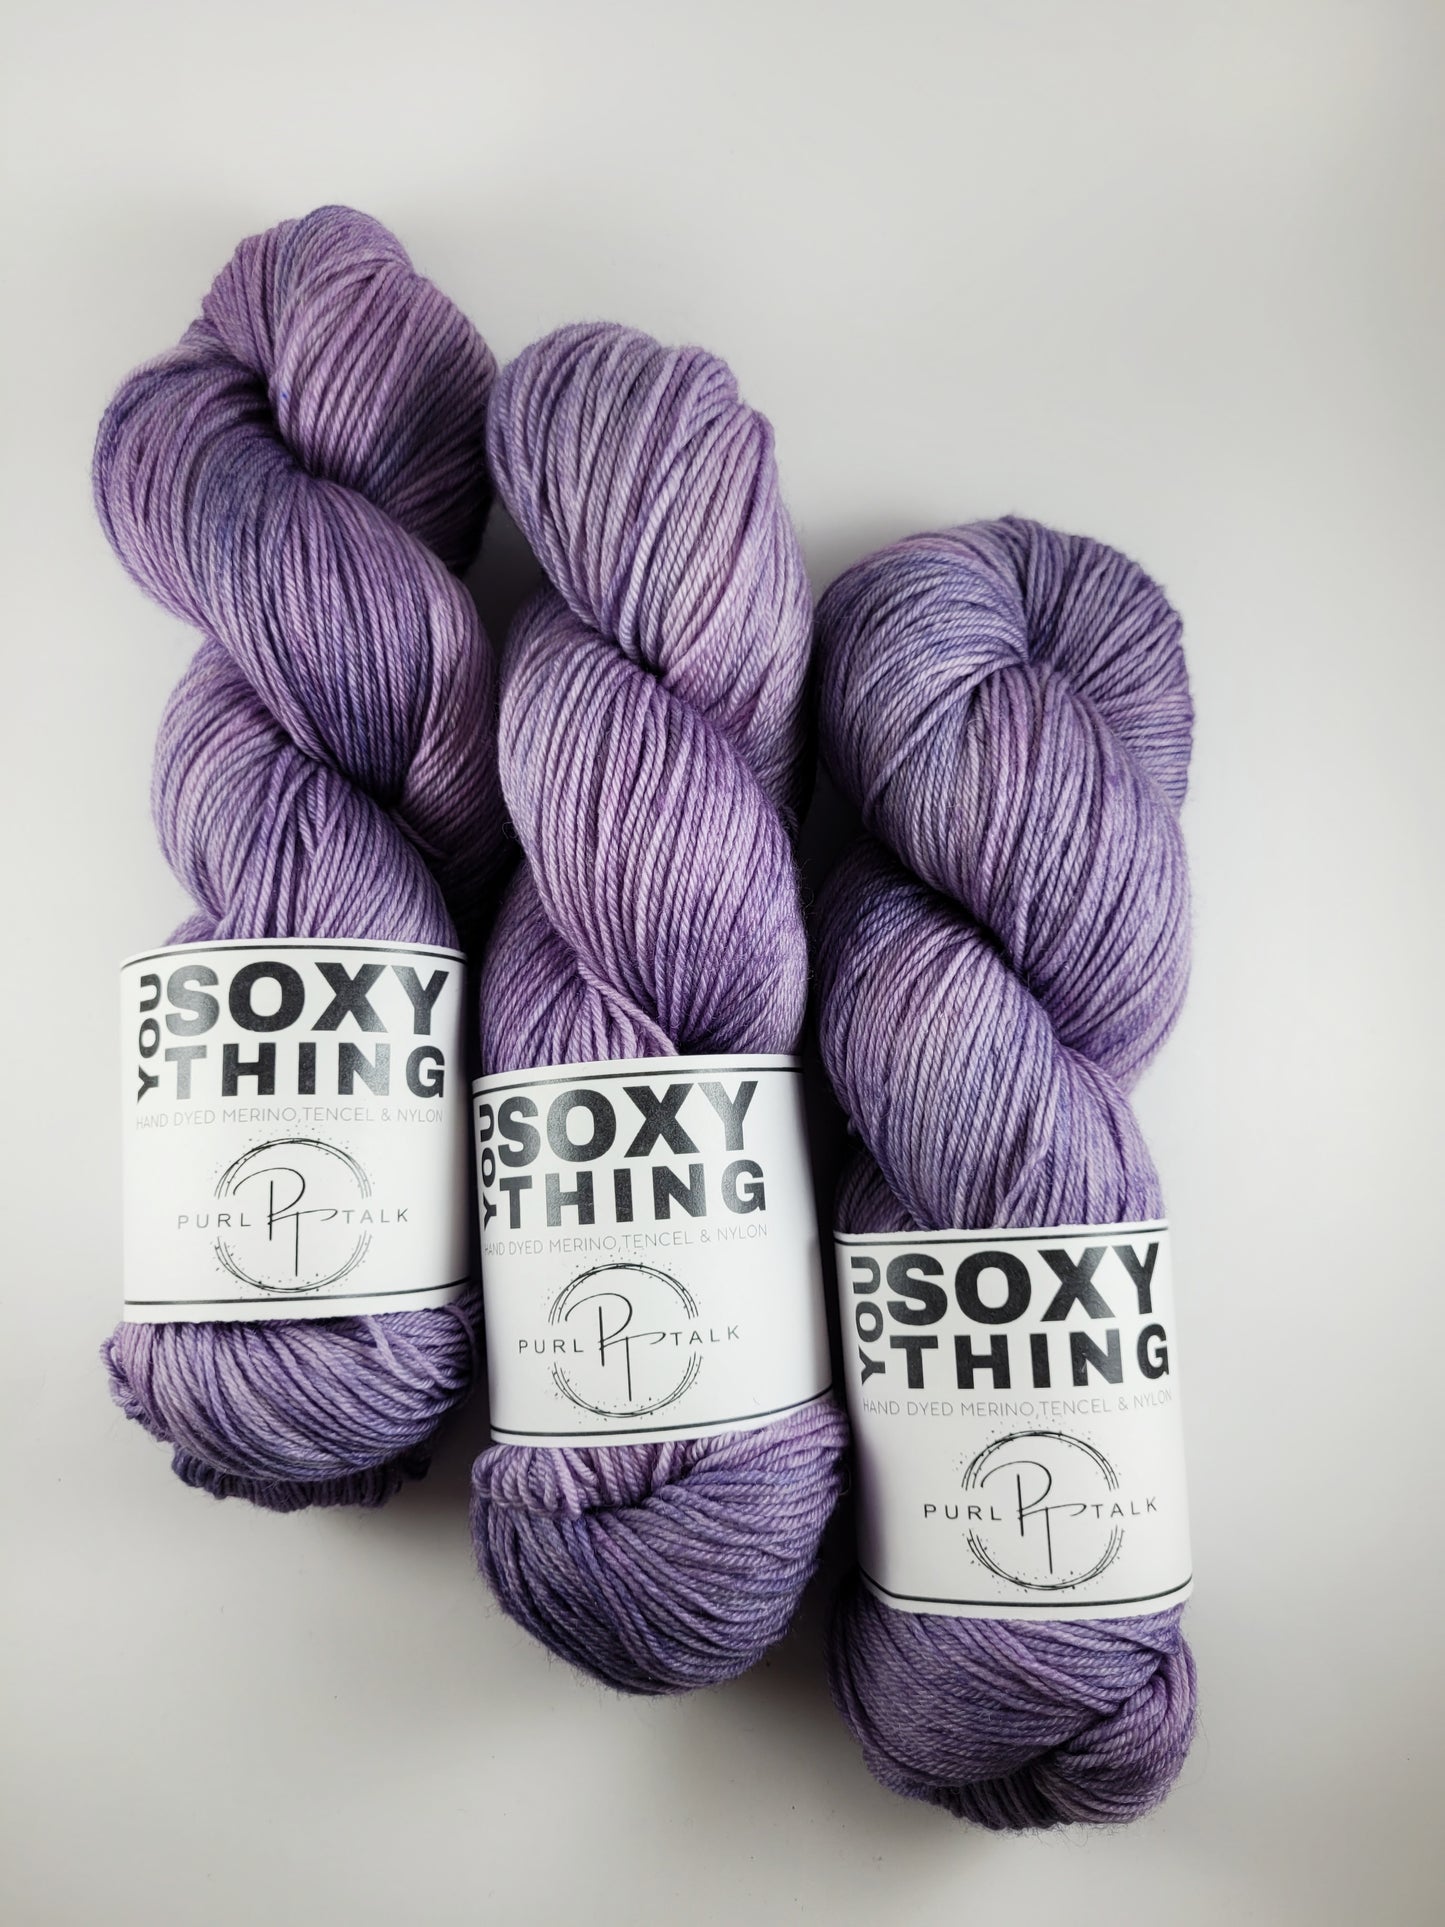 You Soxy Thing:  Lavender Fields, tonal